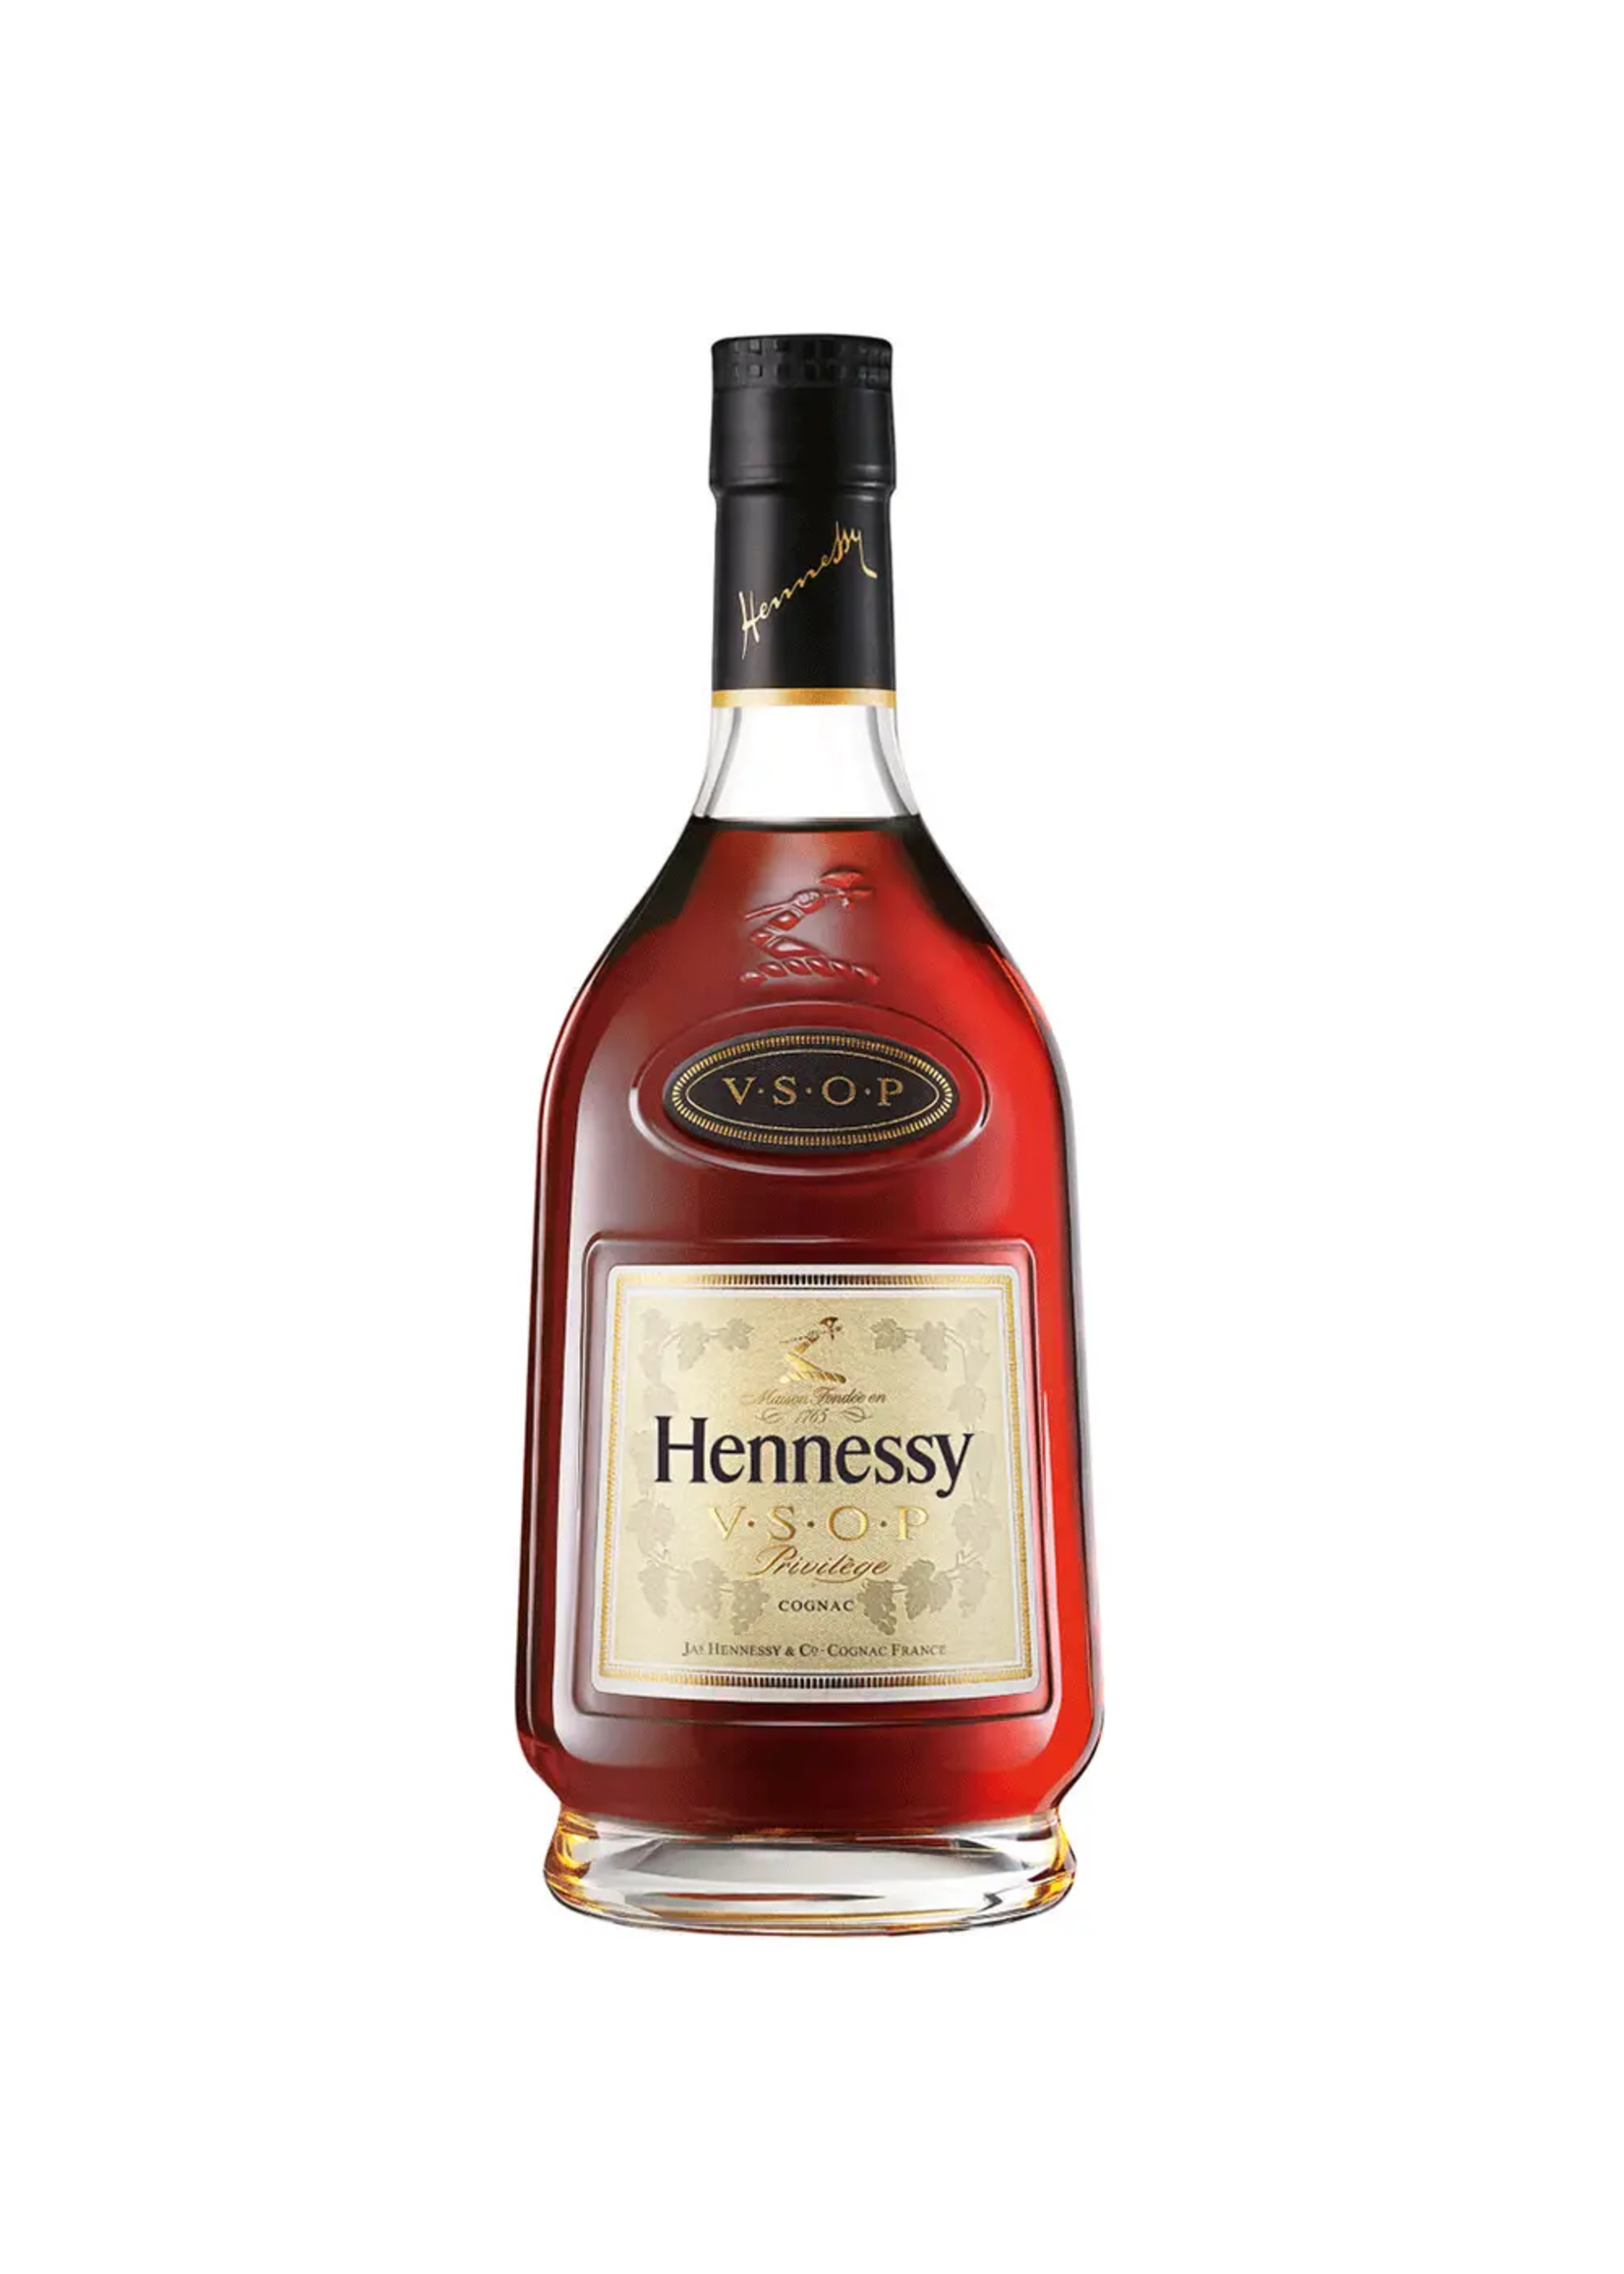 Hennessy Vsop Privilege Cognac Brandy & Cognac 80Proof 750ml